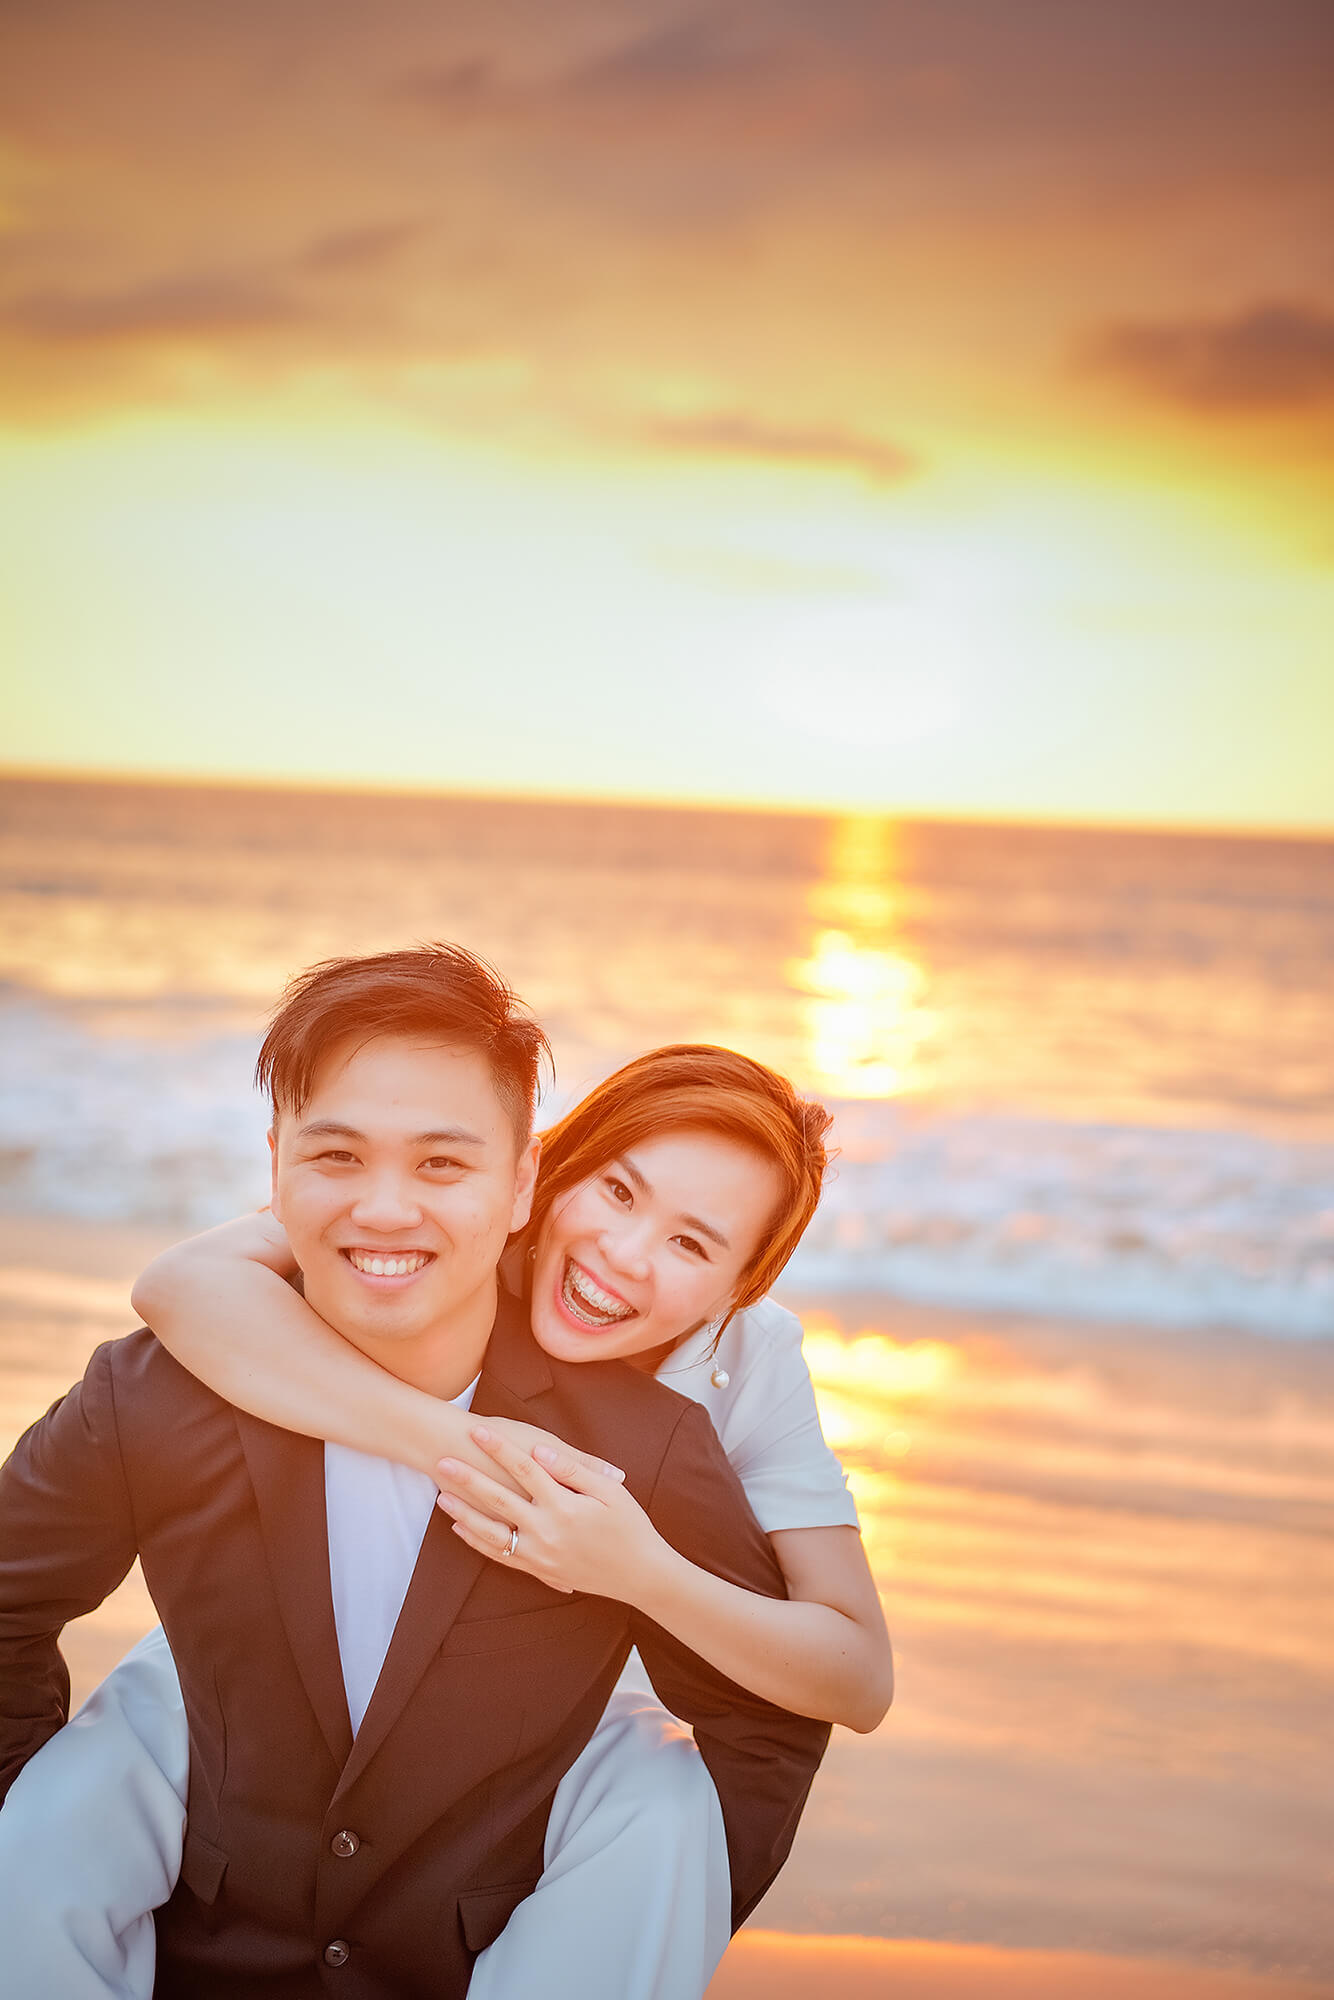 Elaine And T J Pre Wedding Photoshoot Phuket Thailand Photographer Hire A Photographer In 